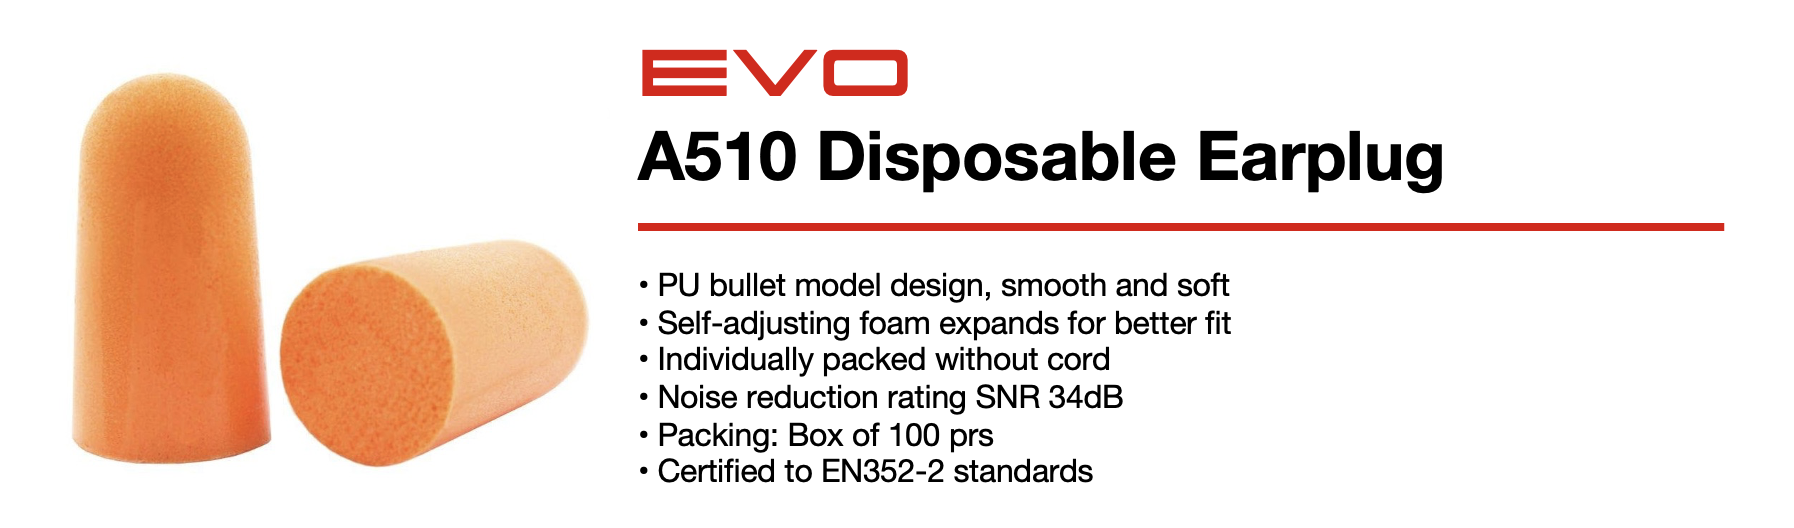 EVO A510 Disposable Earplug